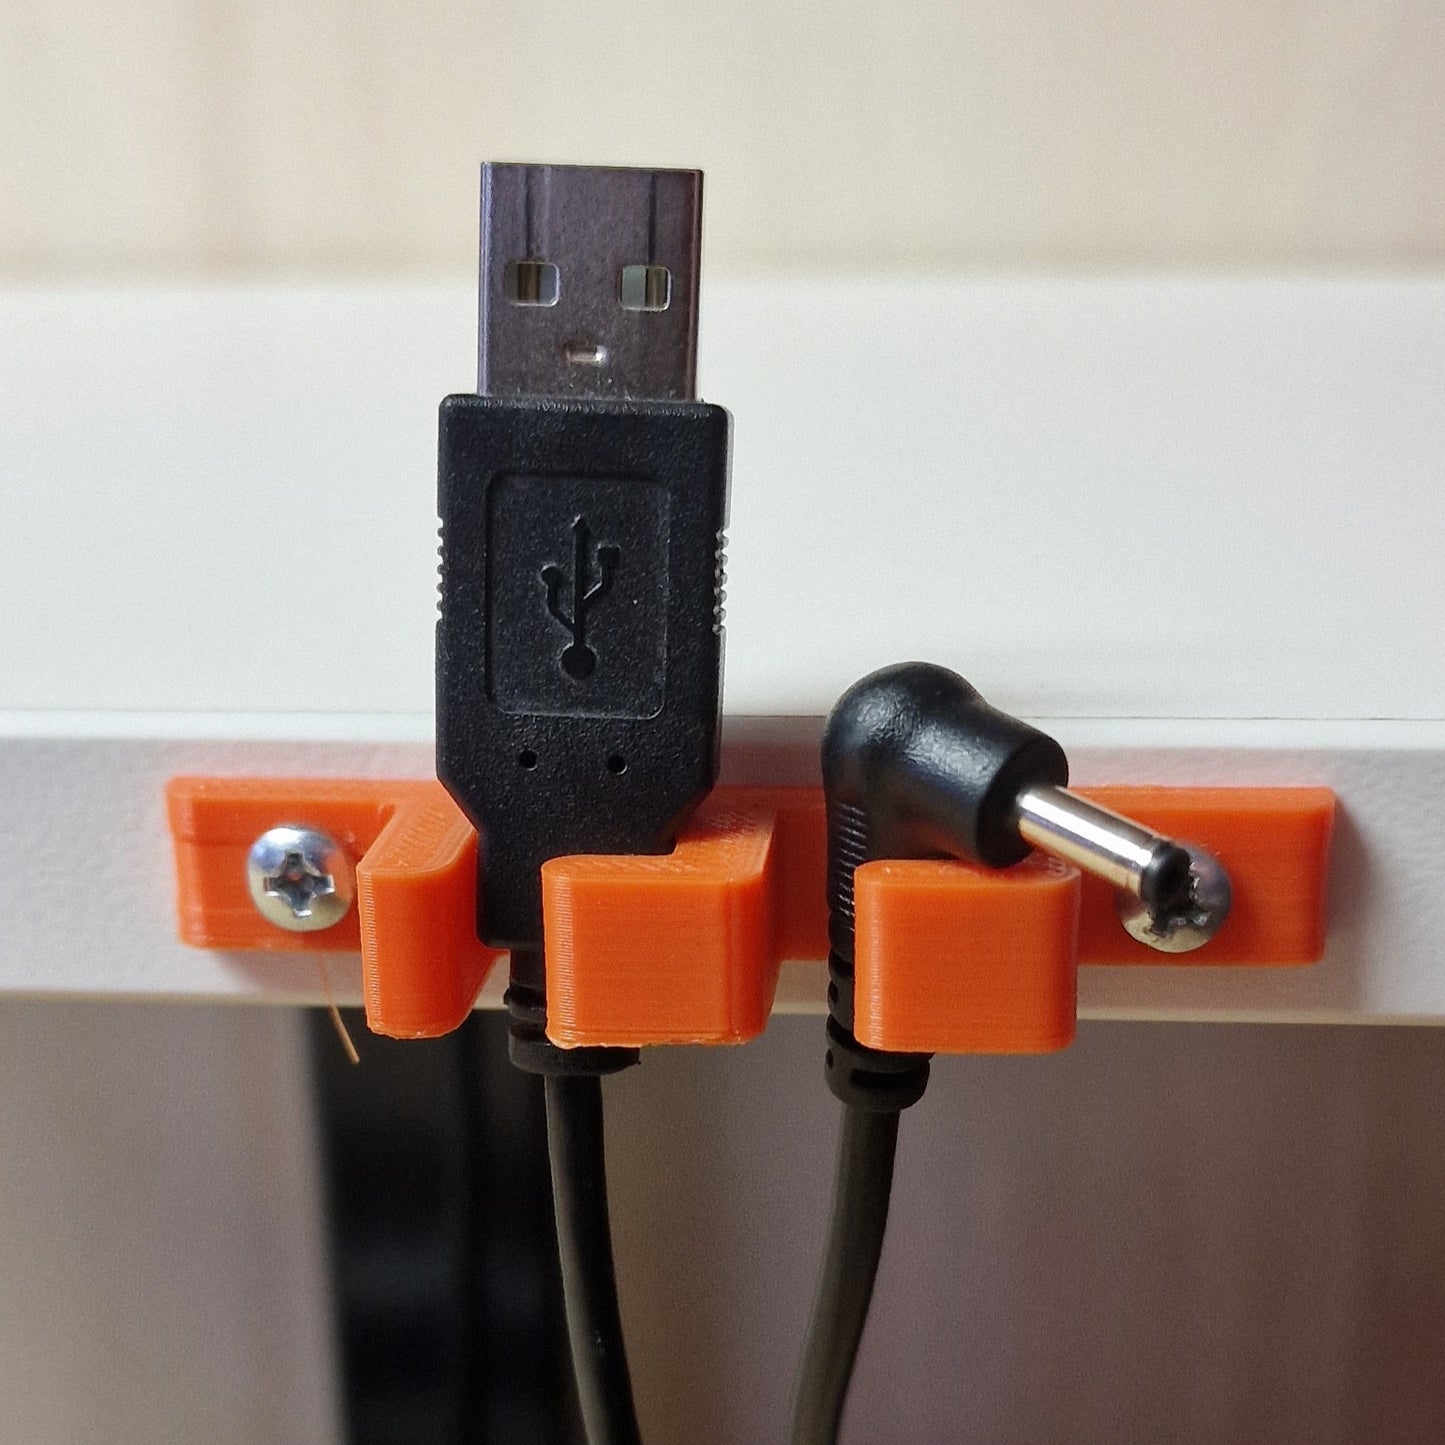 USB connector holder